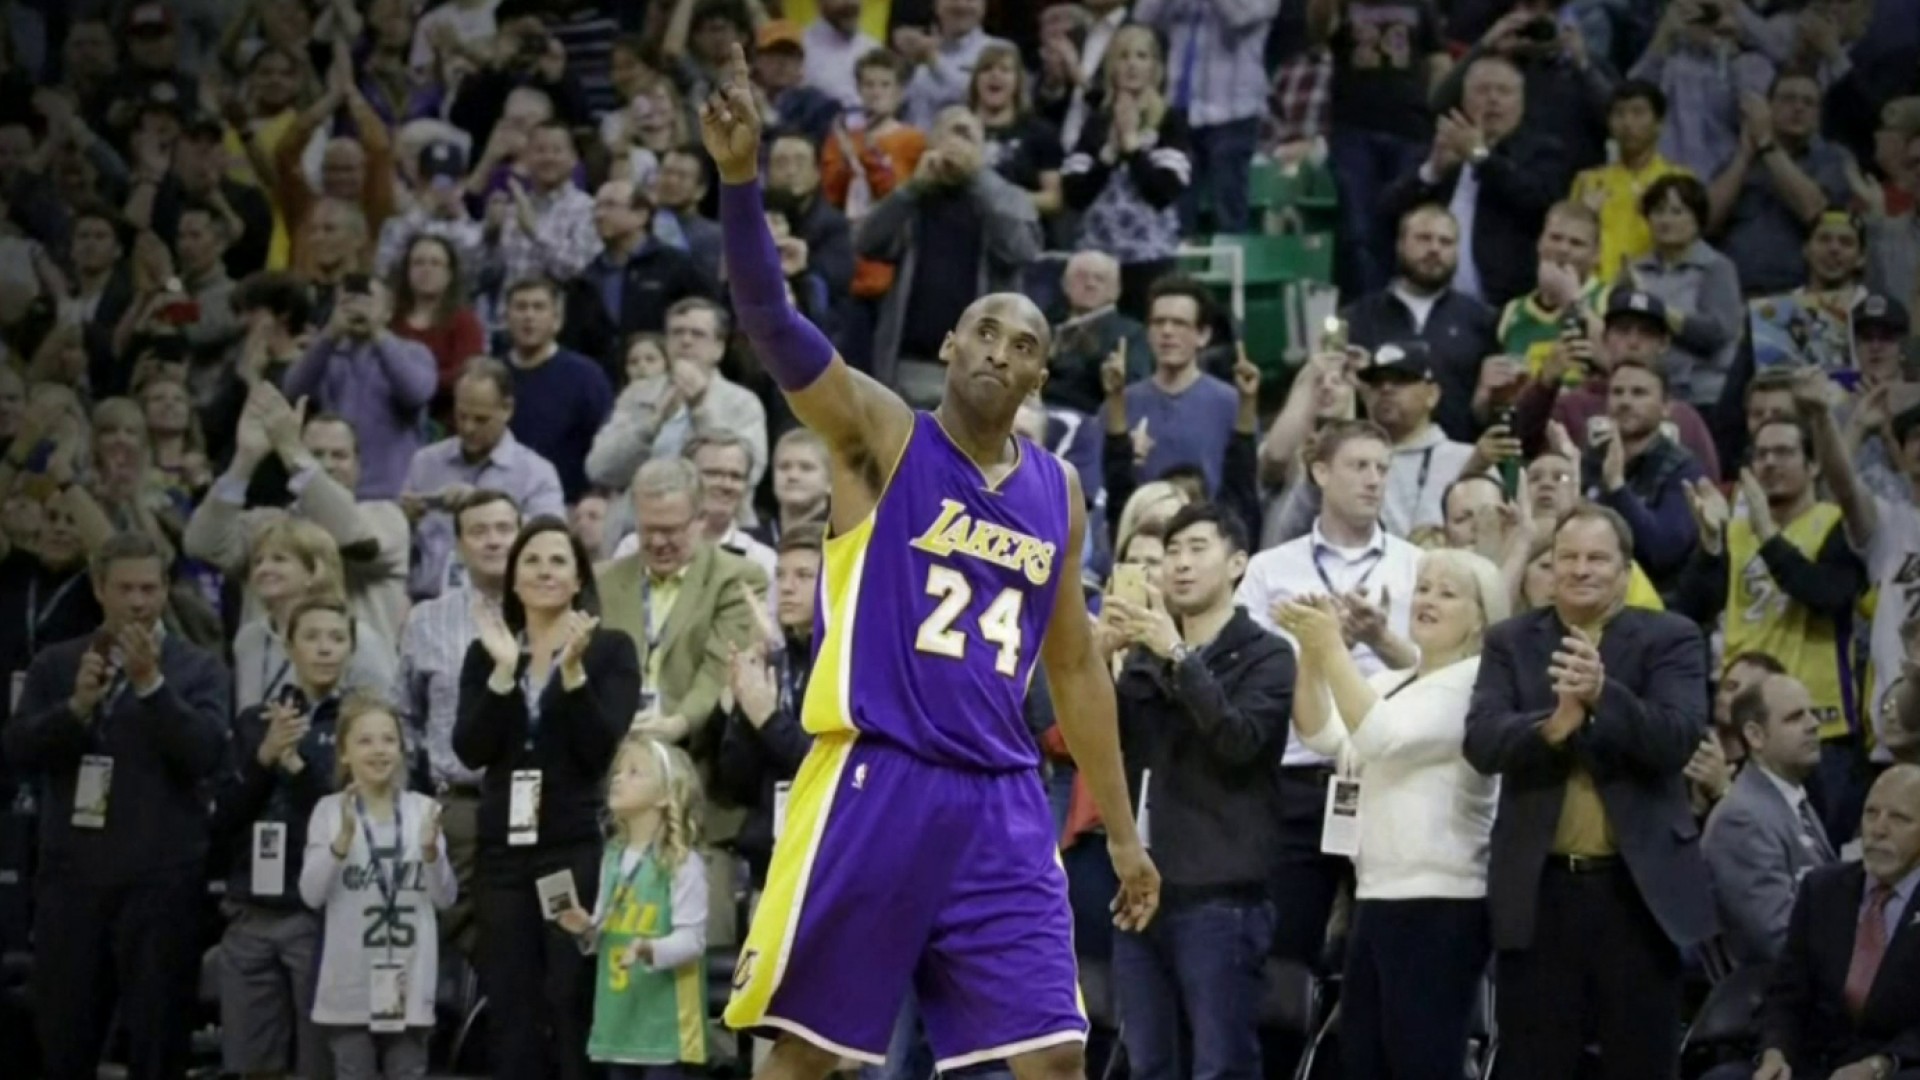 Kobe Bryant left deep legacy in LA sports, basketball world - The